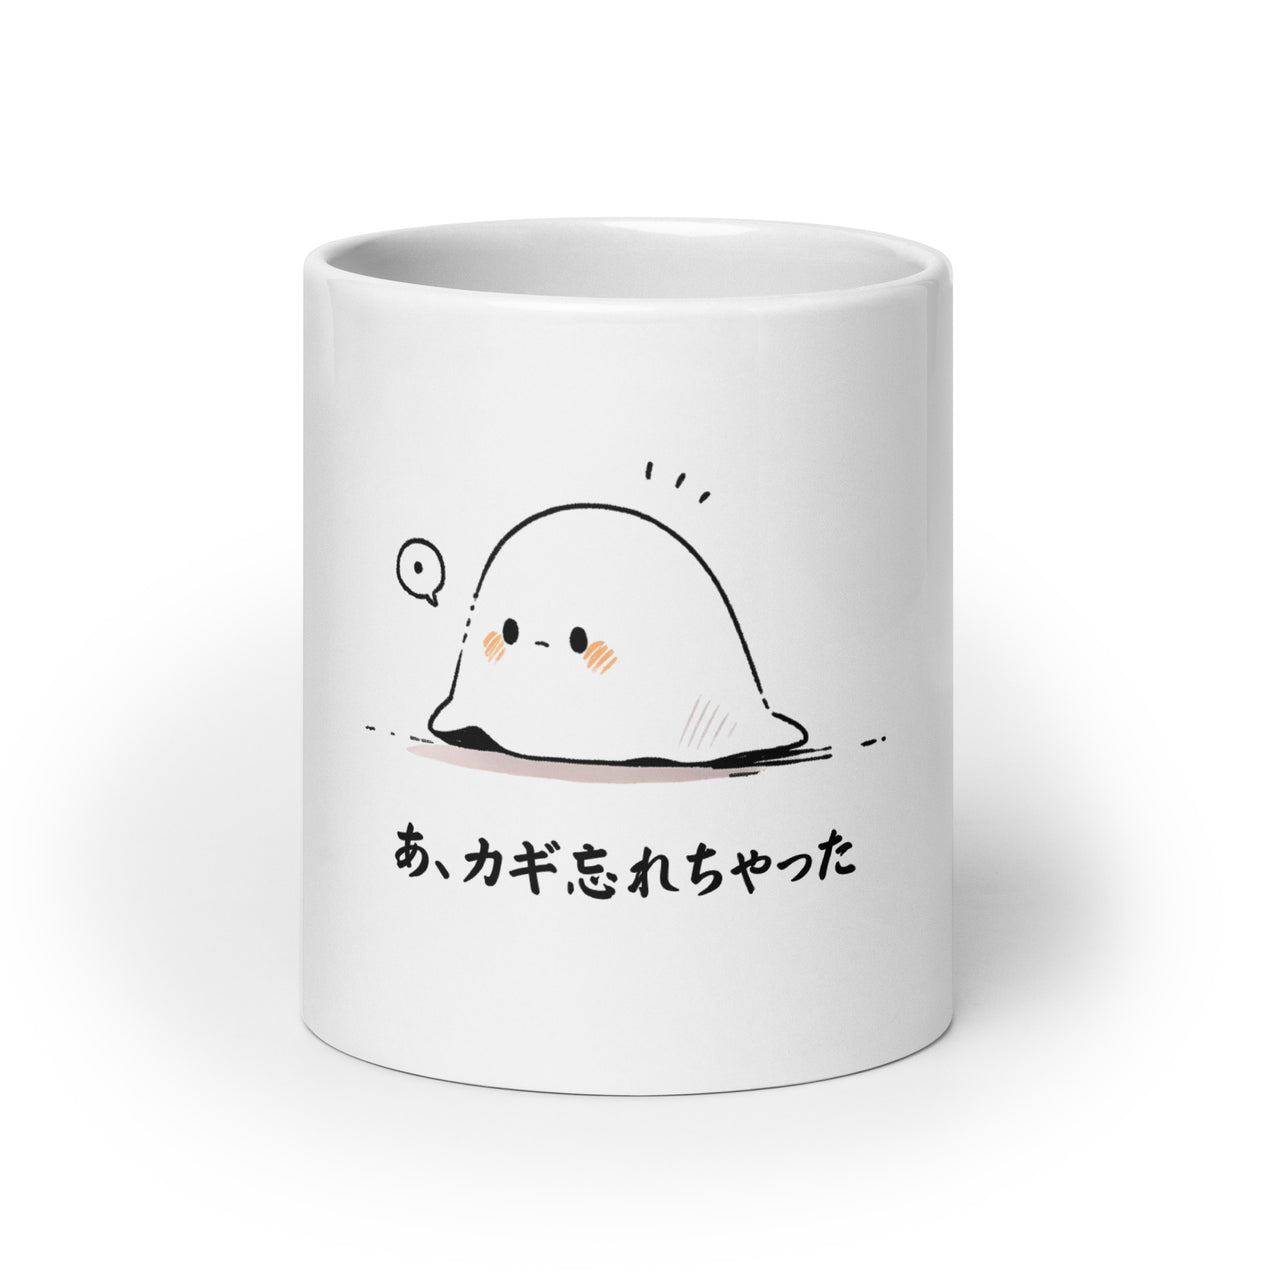 Surprised Manga Ghost - Key Forgetfulness White Mug